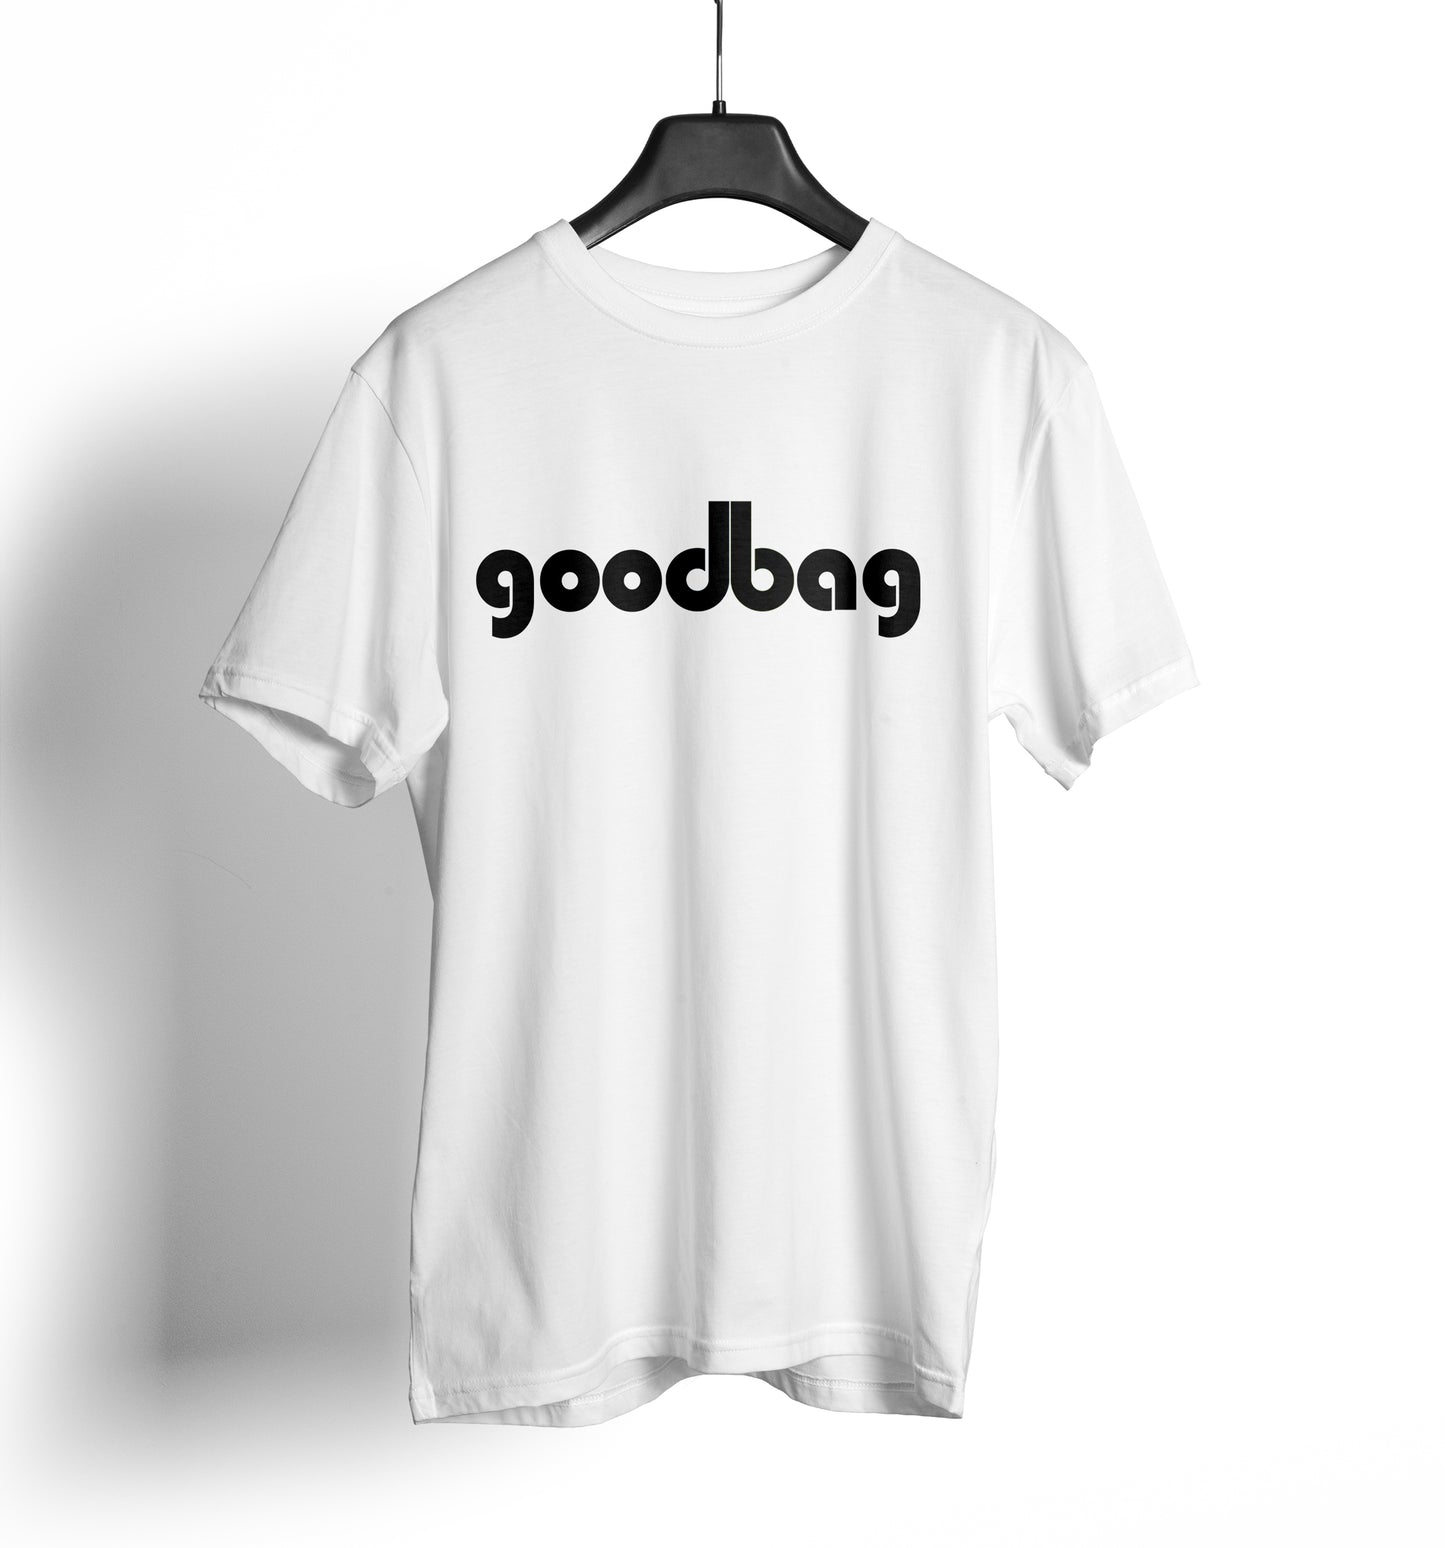 Dirty Bags Cornhole T Shirt - goodbag White